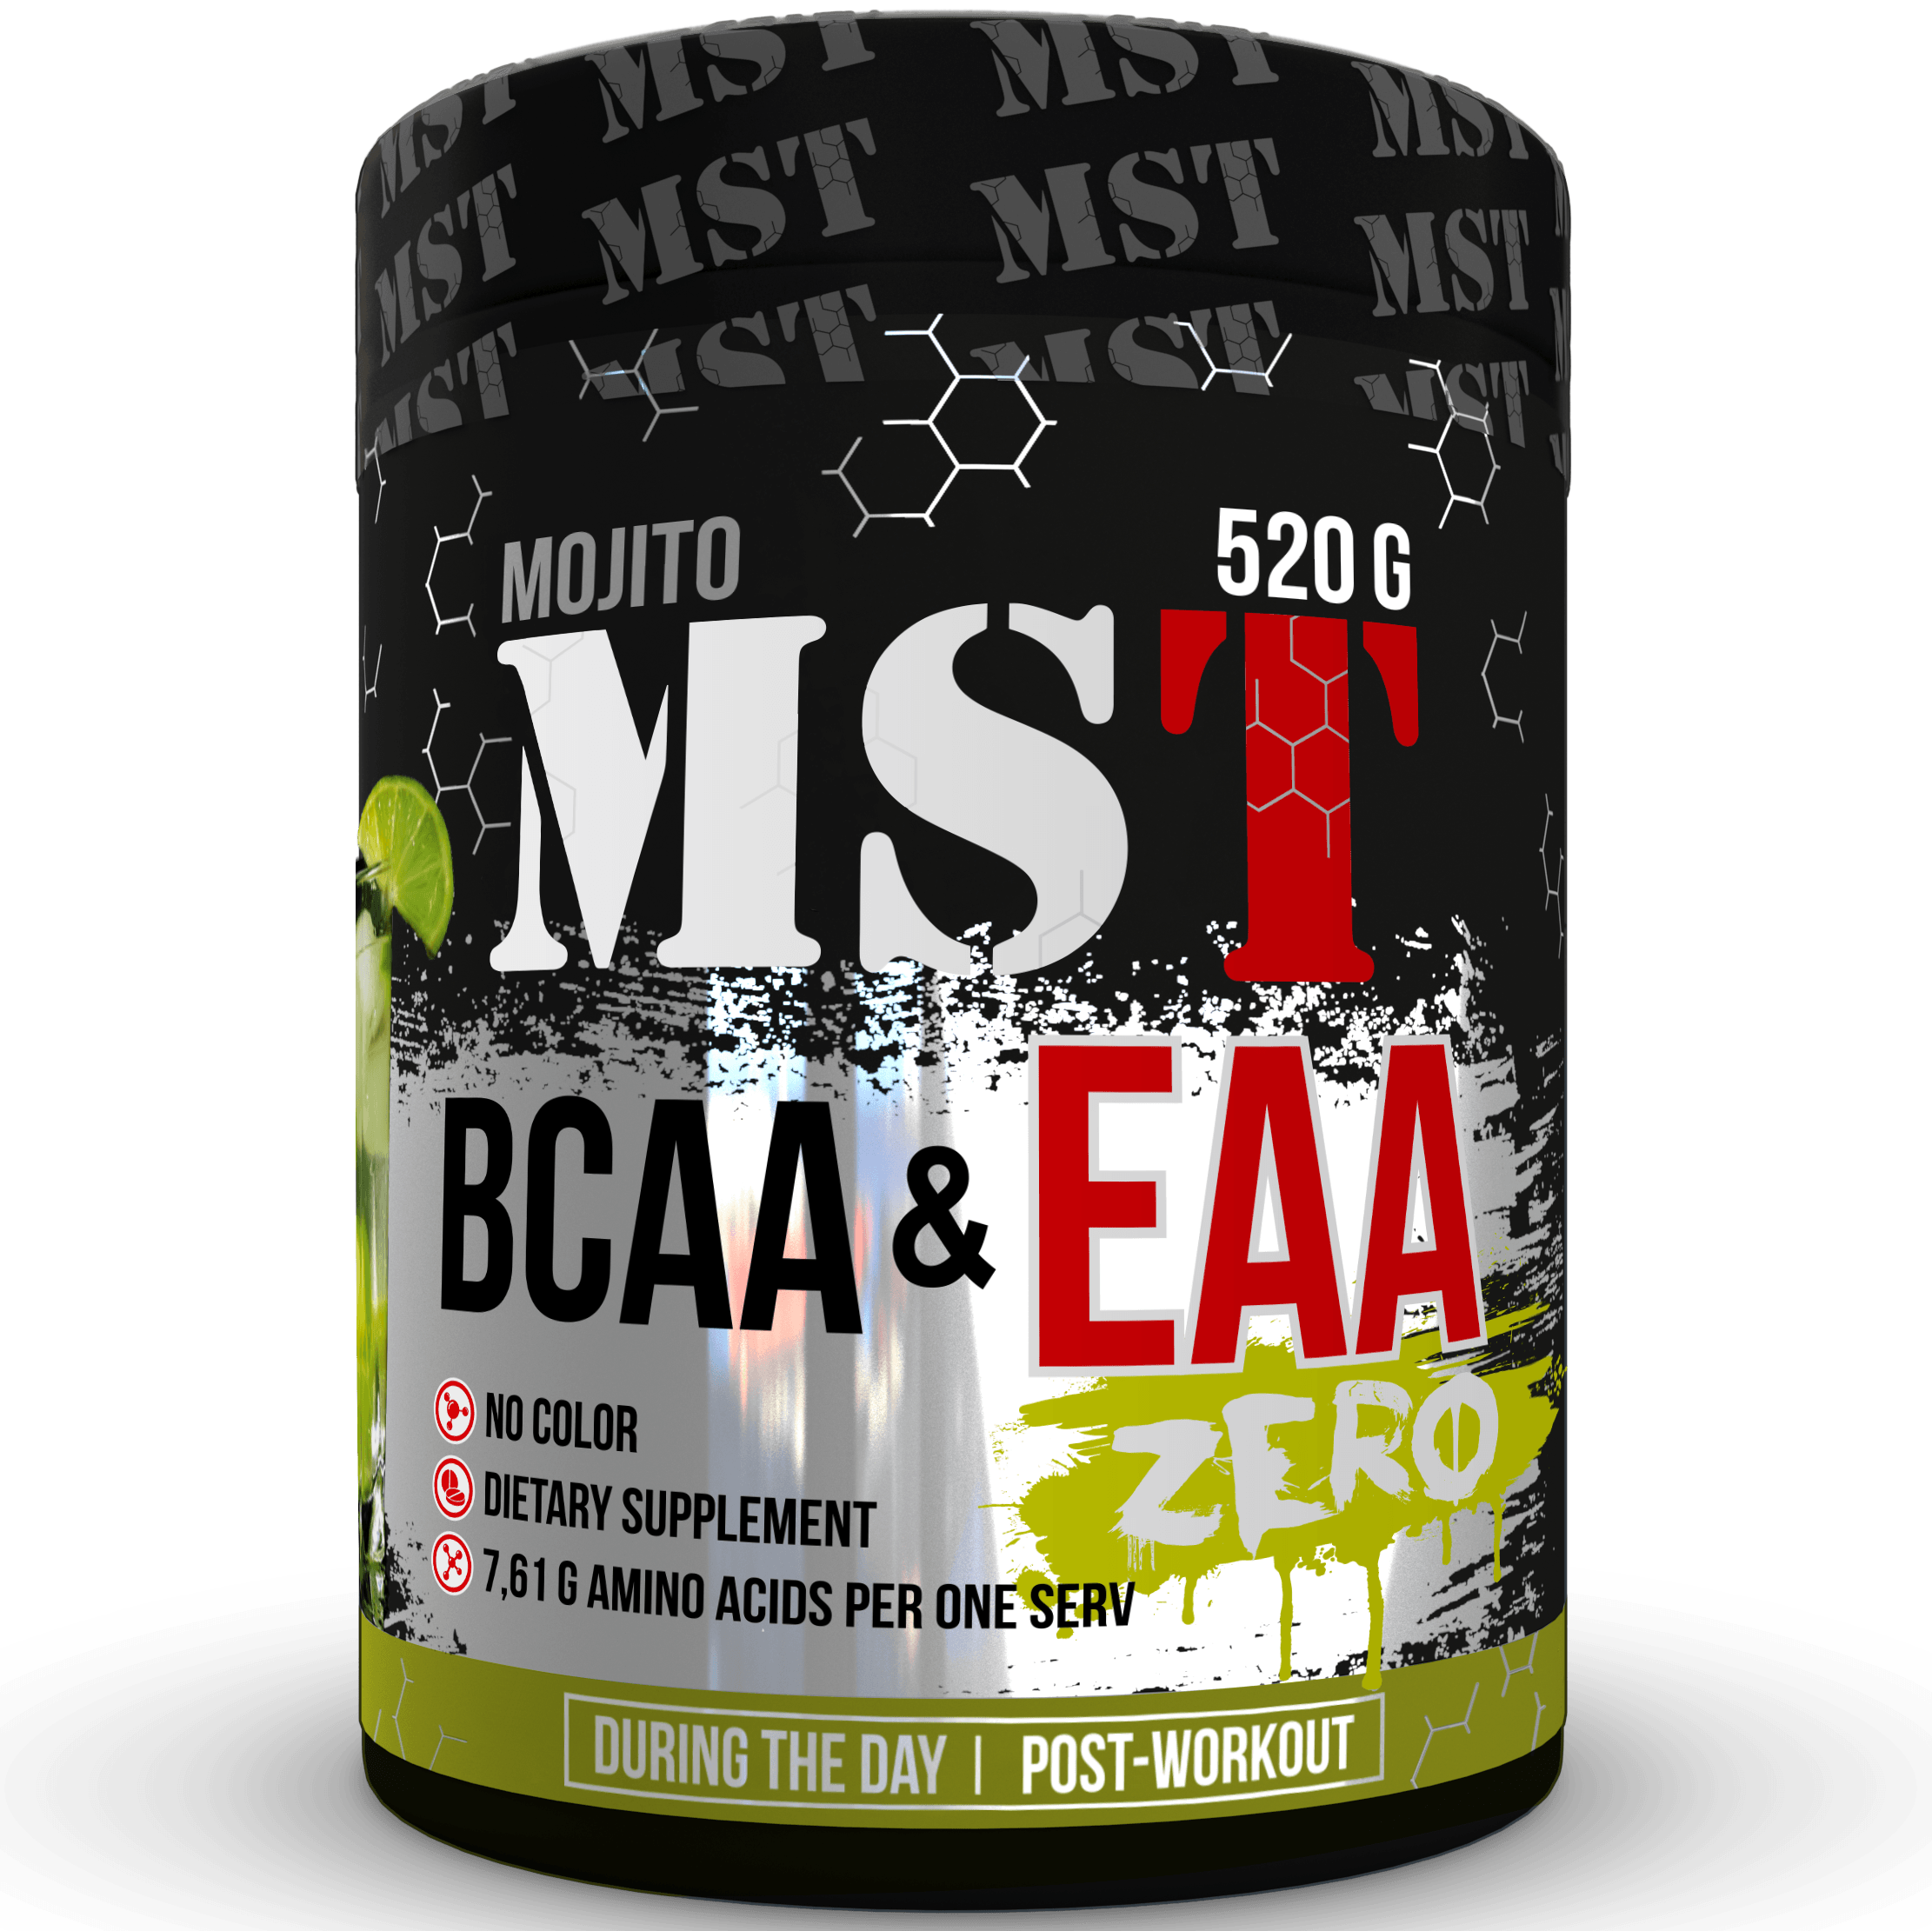 BCAA & EAA Zero, 520 g, MST Nutrition. Amino acid complex. 